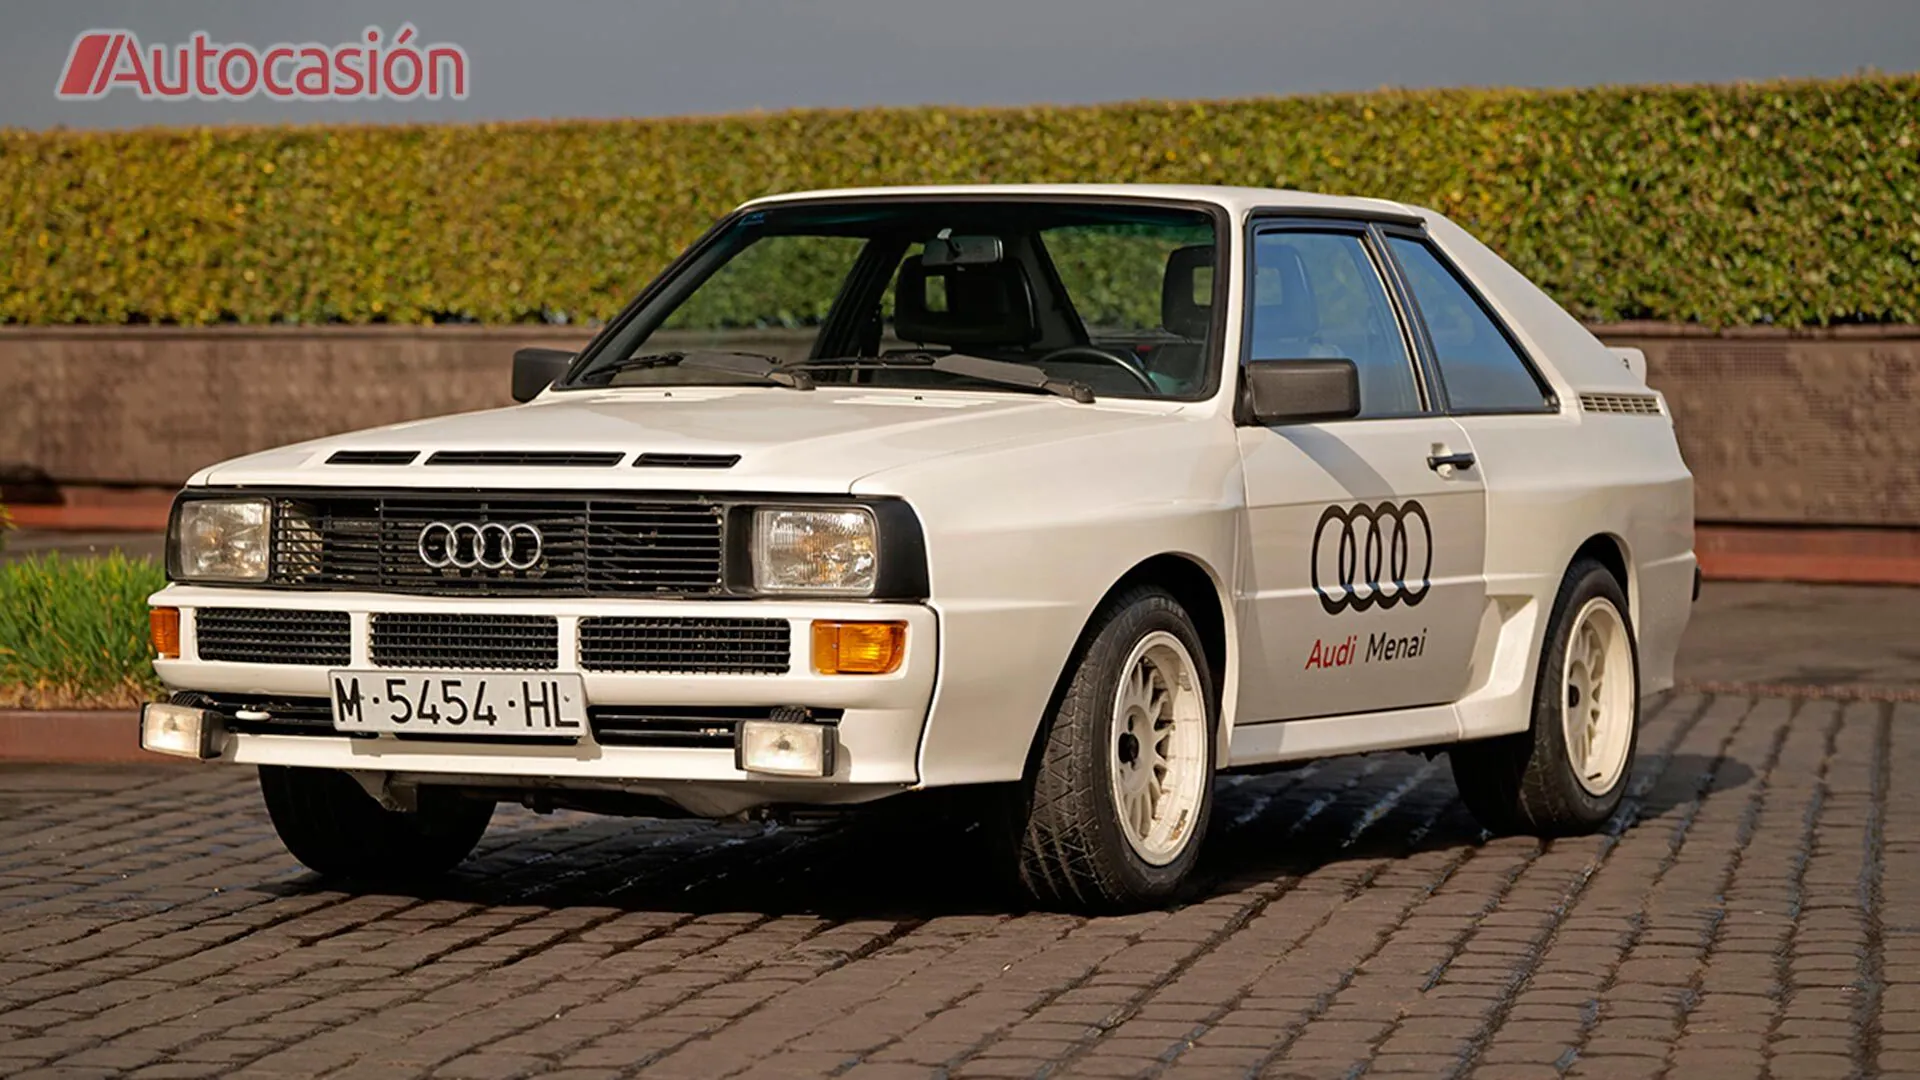 Vídeoprueba del Audi Sport Quattro de 1987